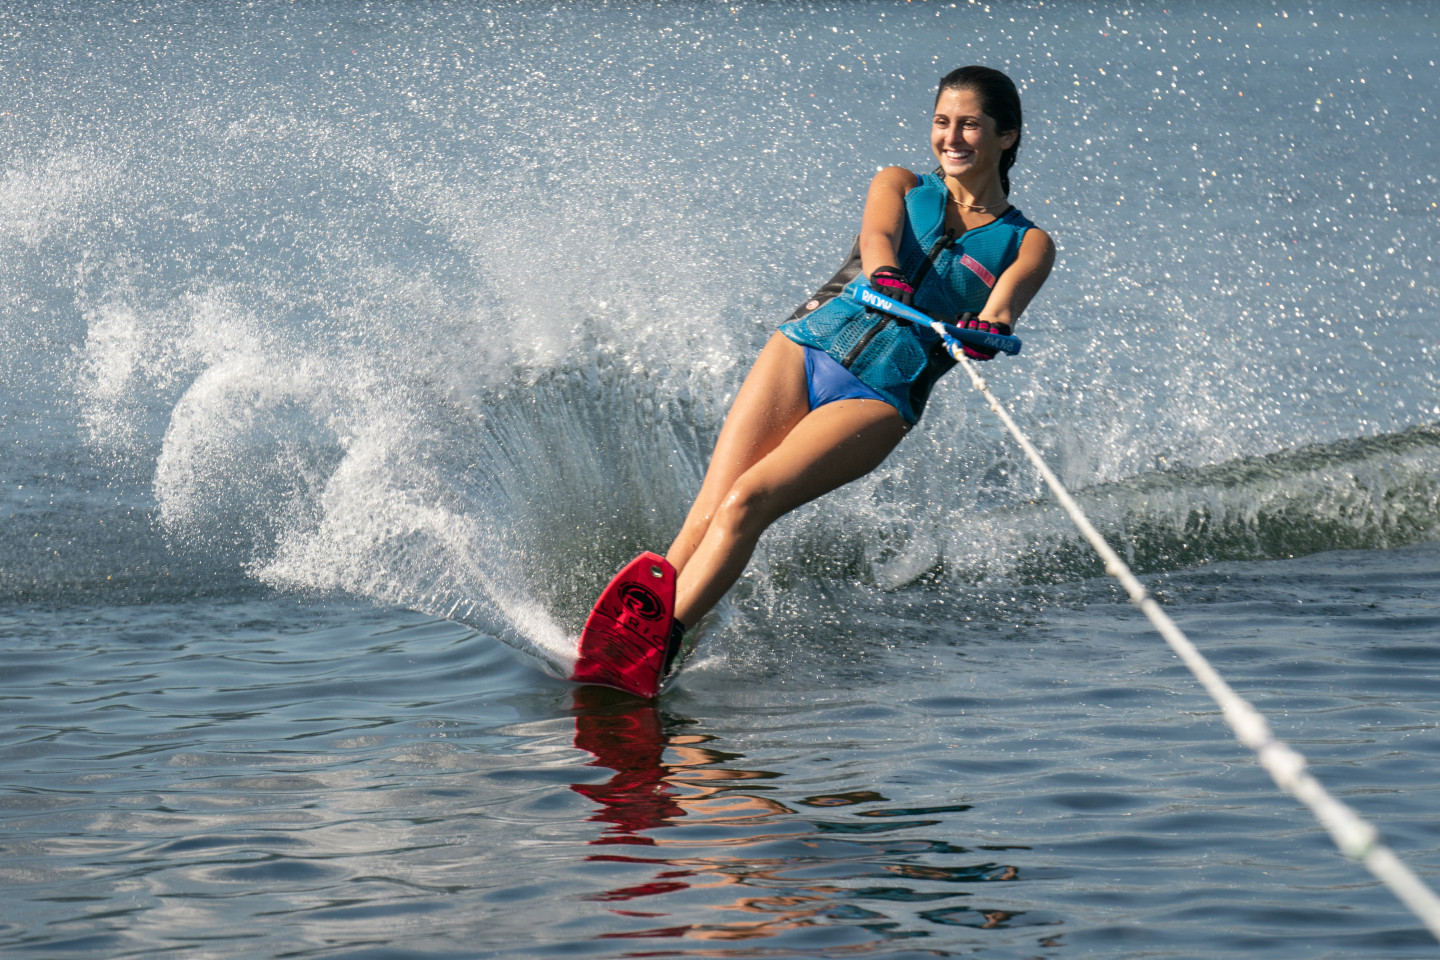 Rachel Evangelista water skis on one ski.